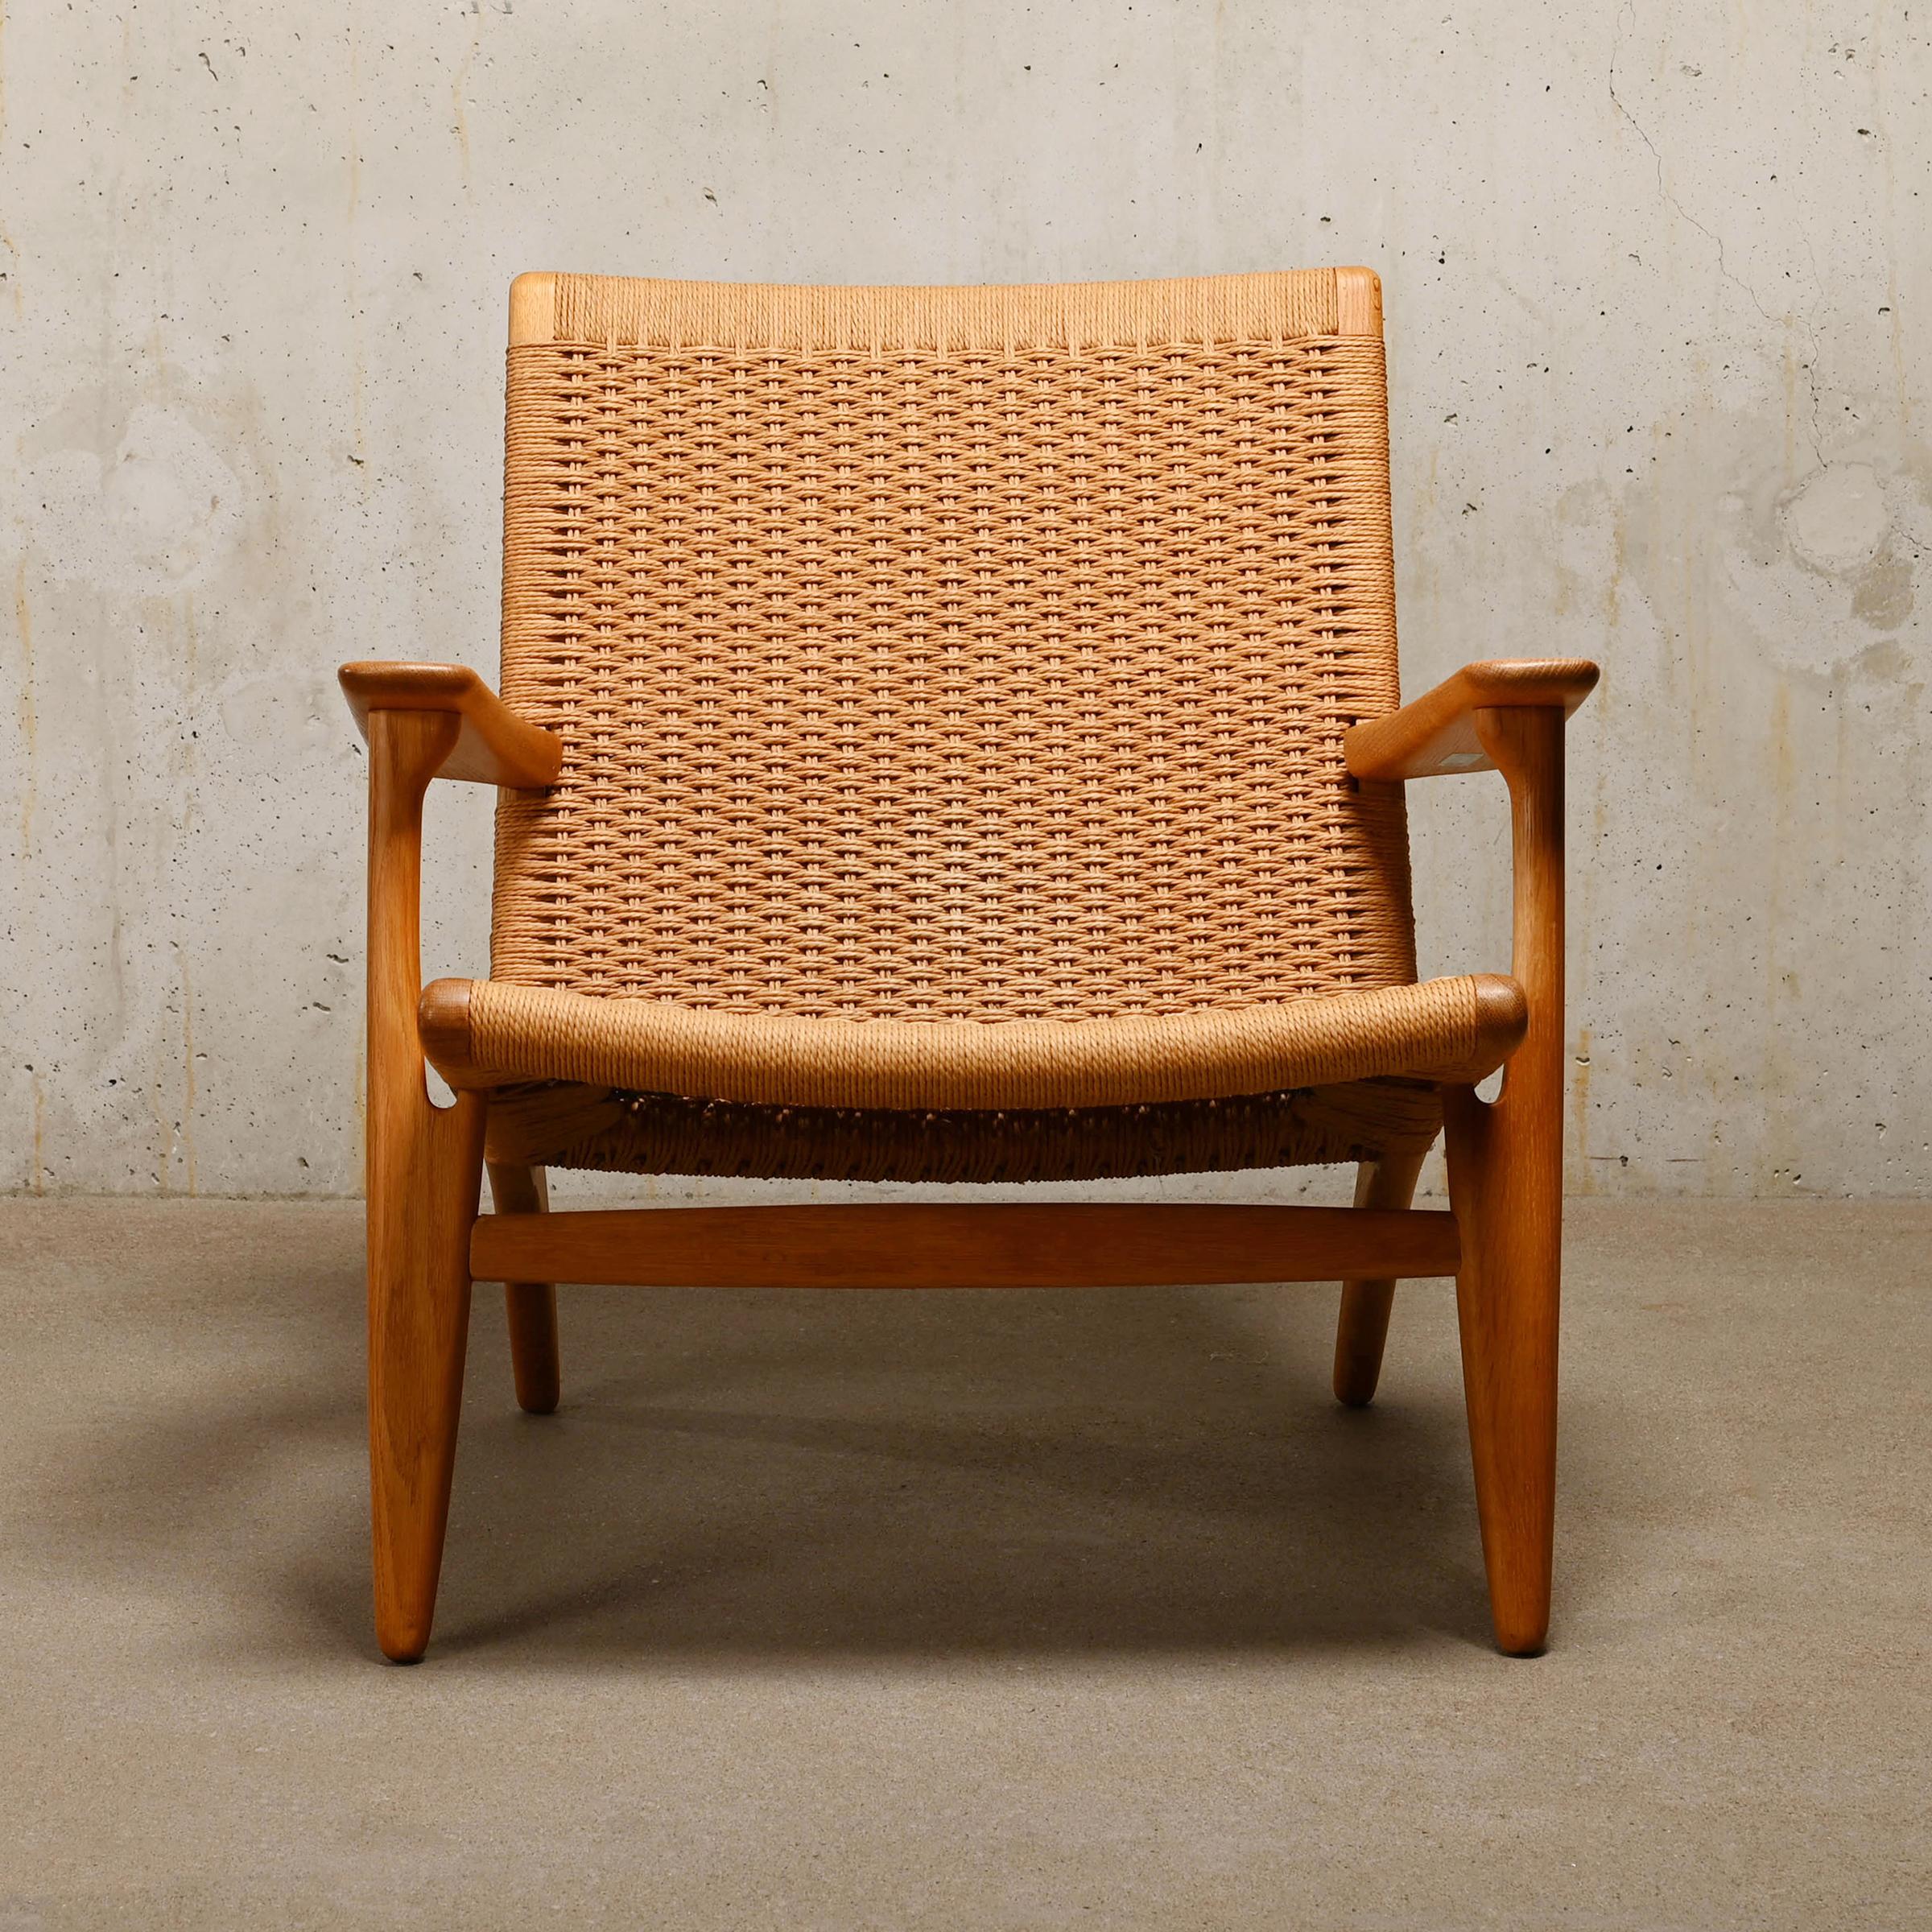 Scandinavian Modern Hans J. Wegner CH25 Lounge Chair in oak and paper-cord for Carl Hansen & Son